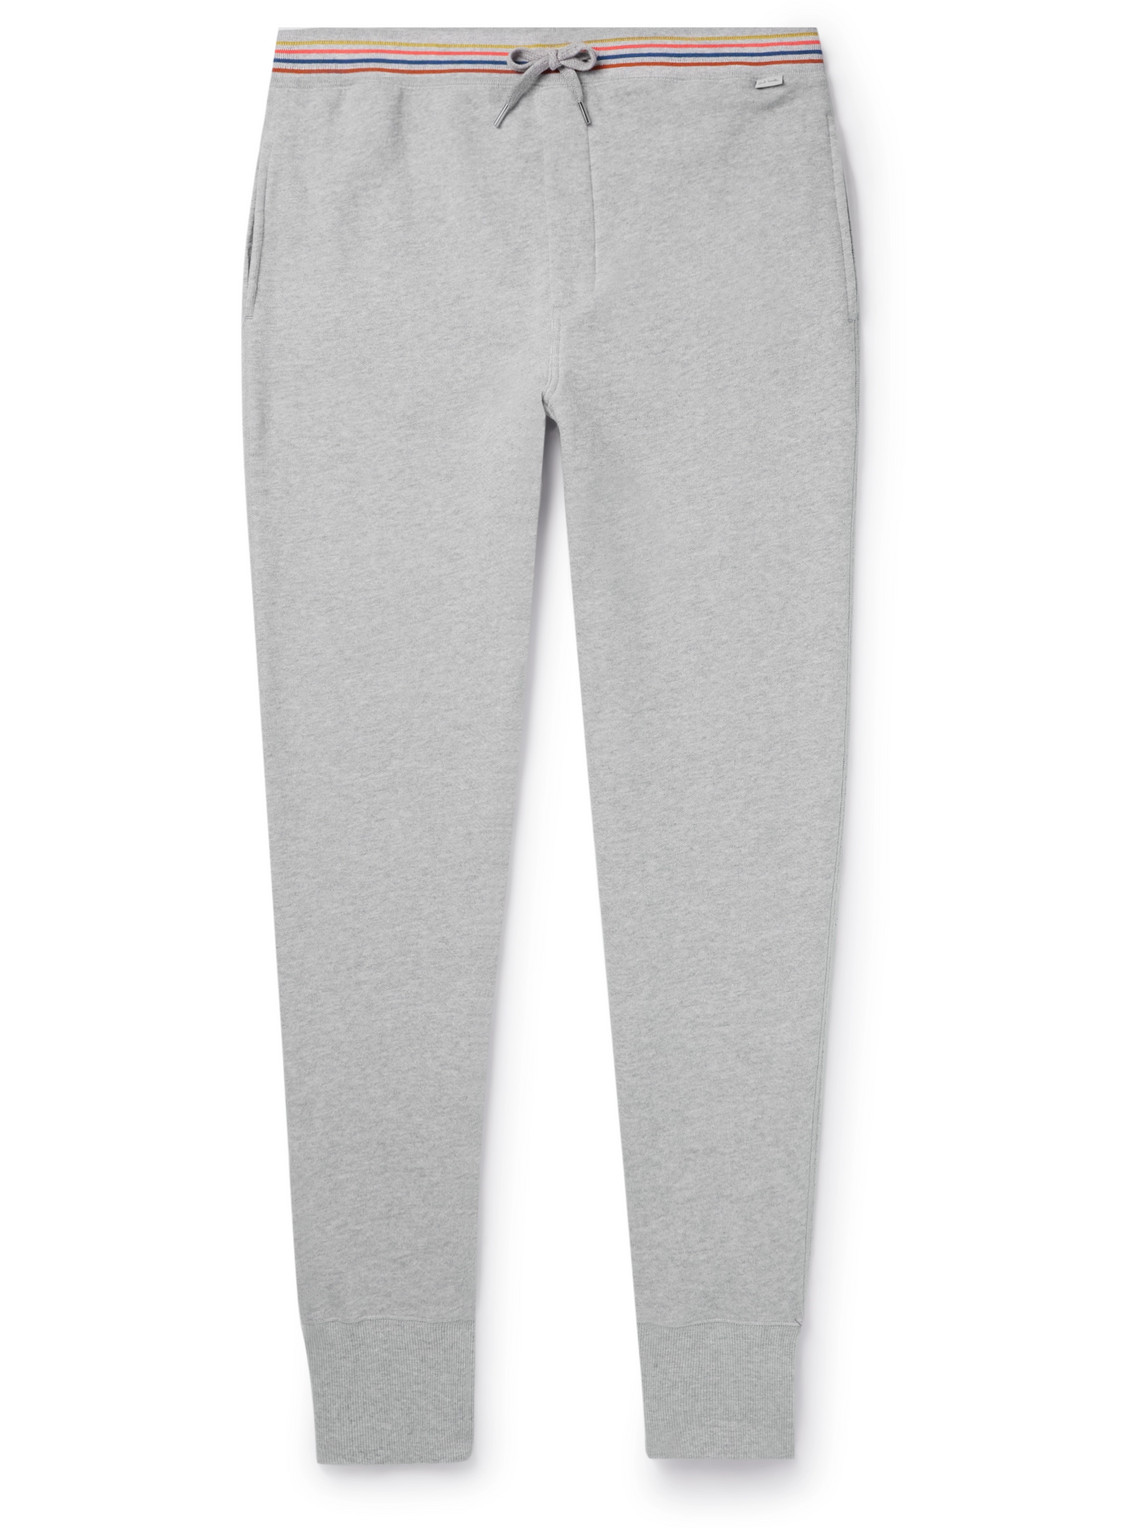 Paul Smith - Tapered Cotton-Jersey Sweatpants - Men - Gray - M von Paul Smith